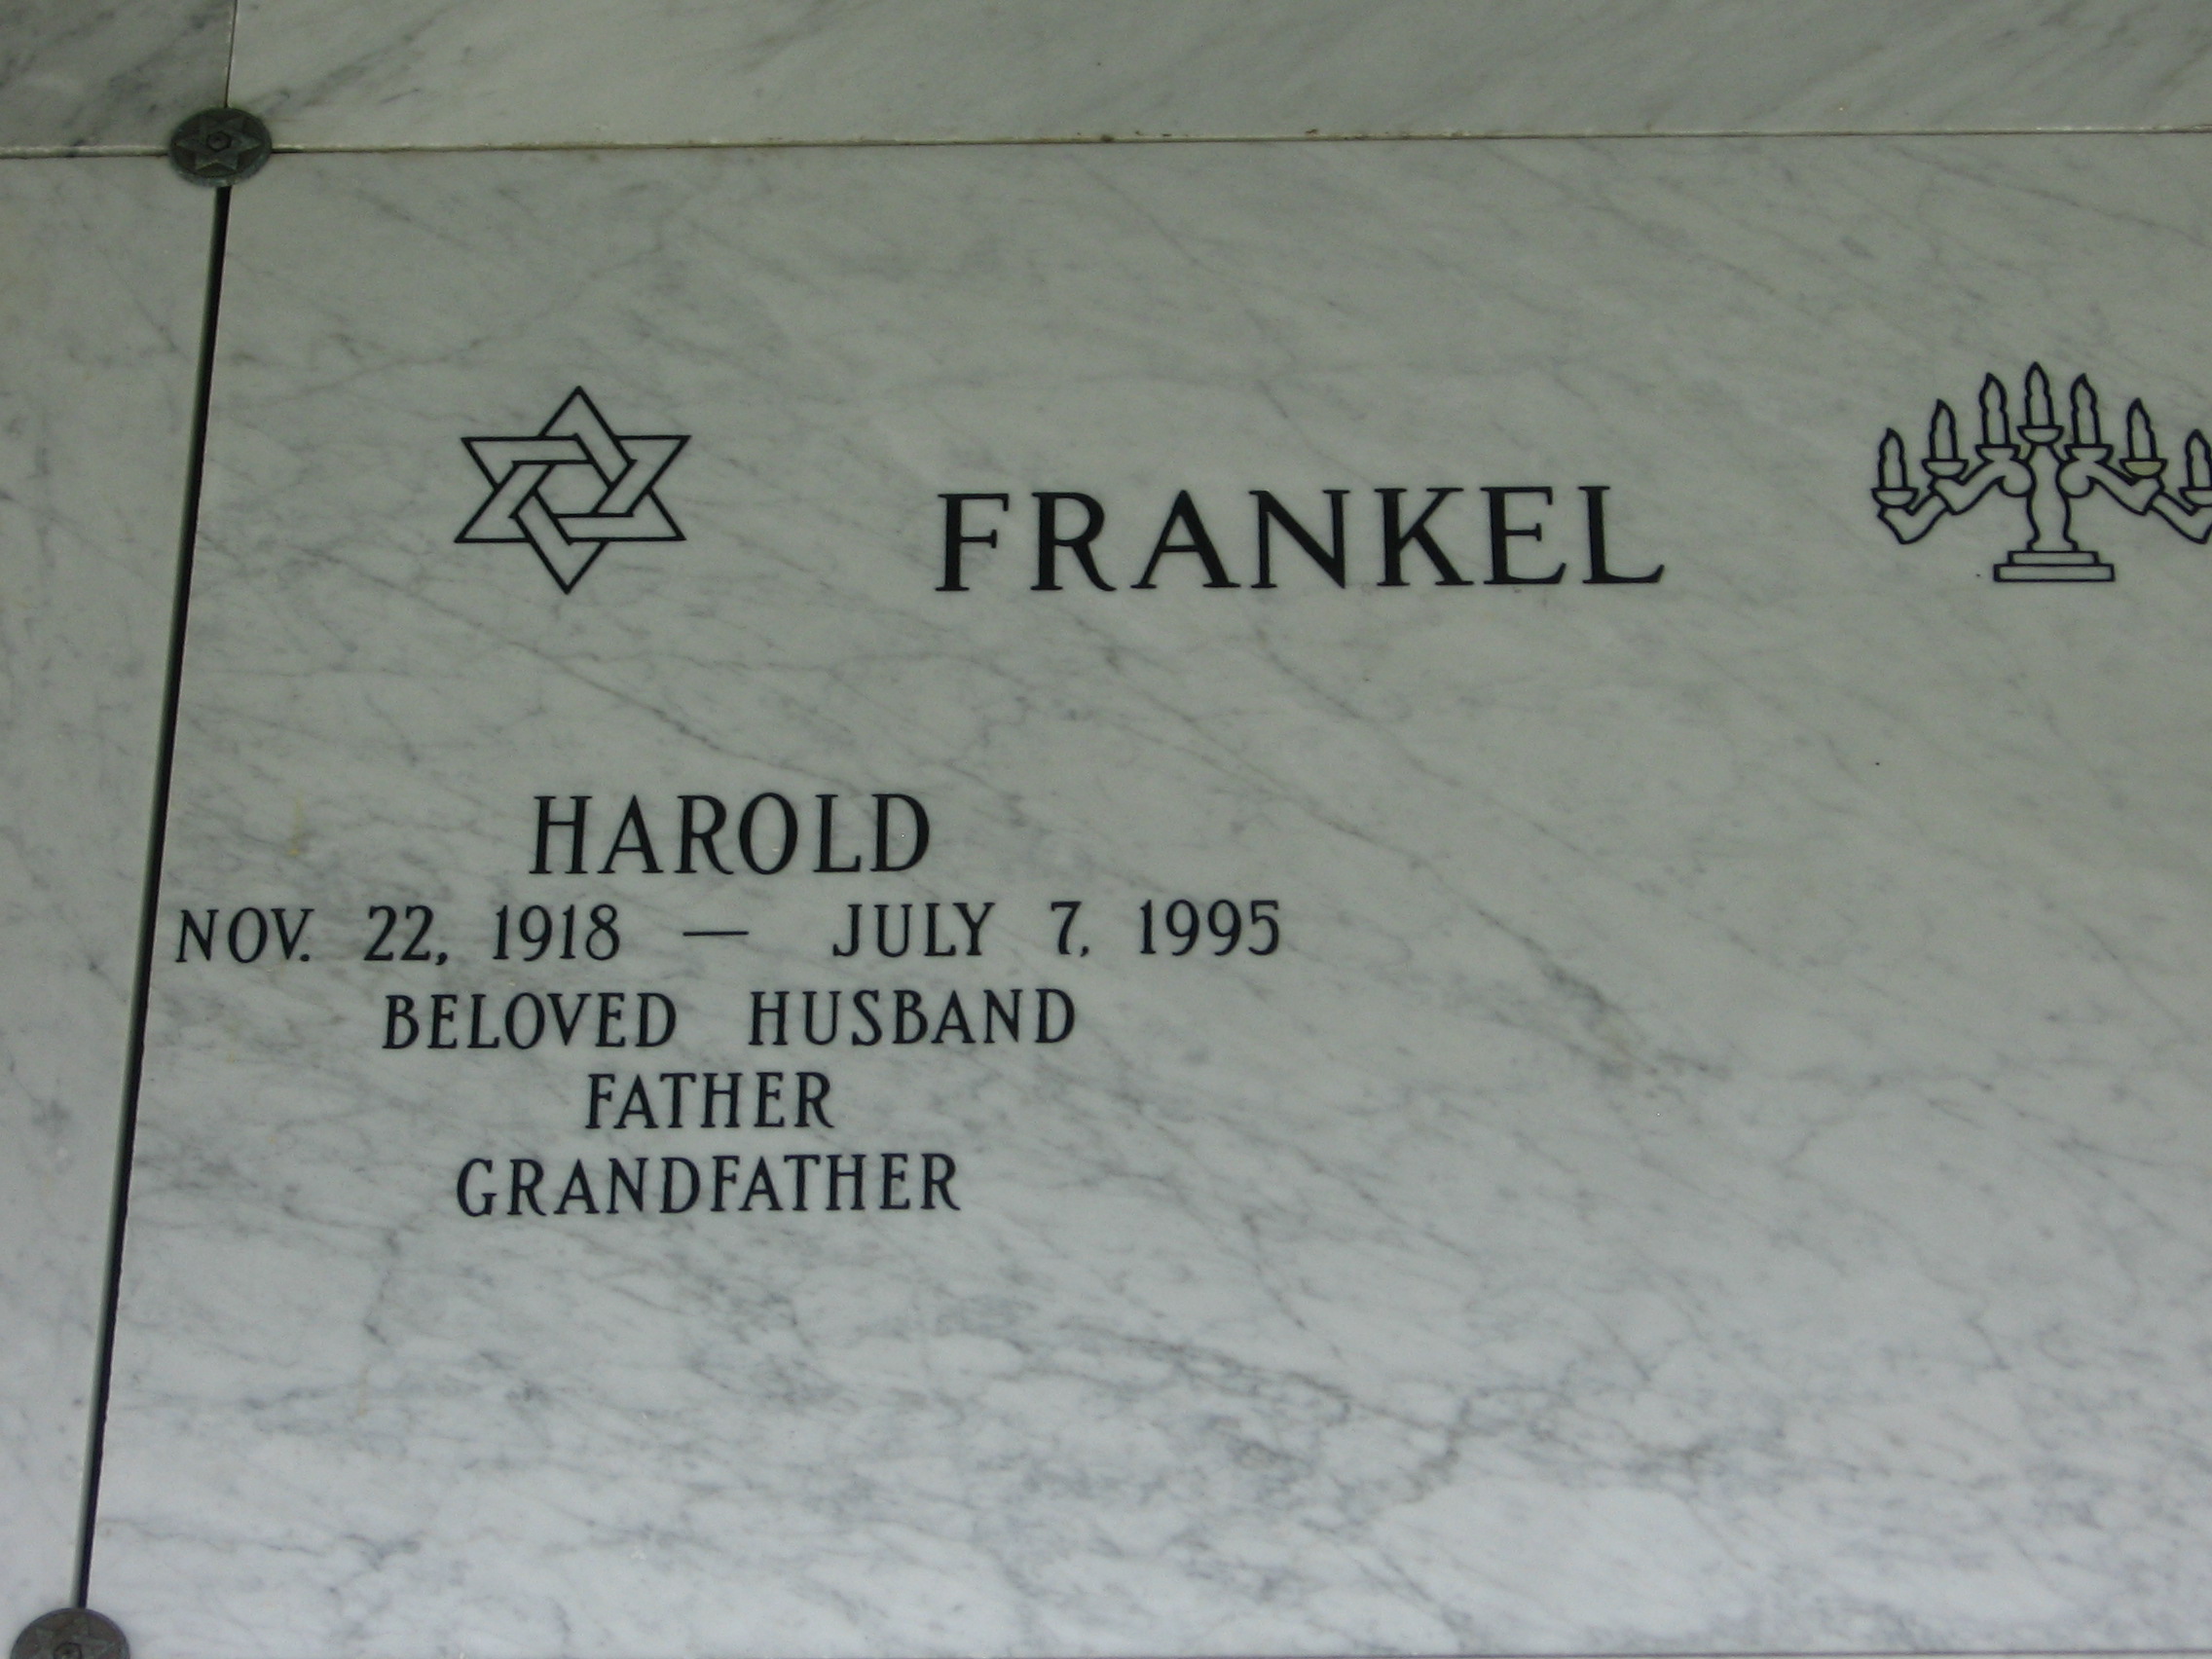 Harold Frankel